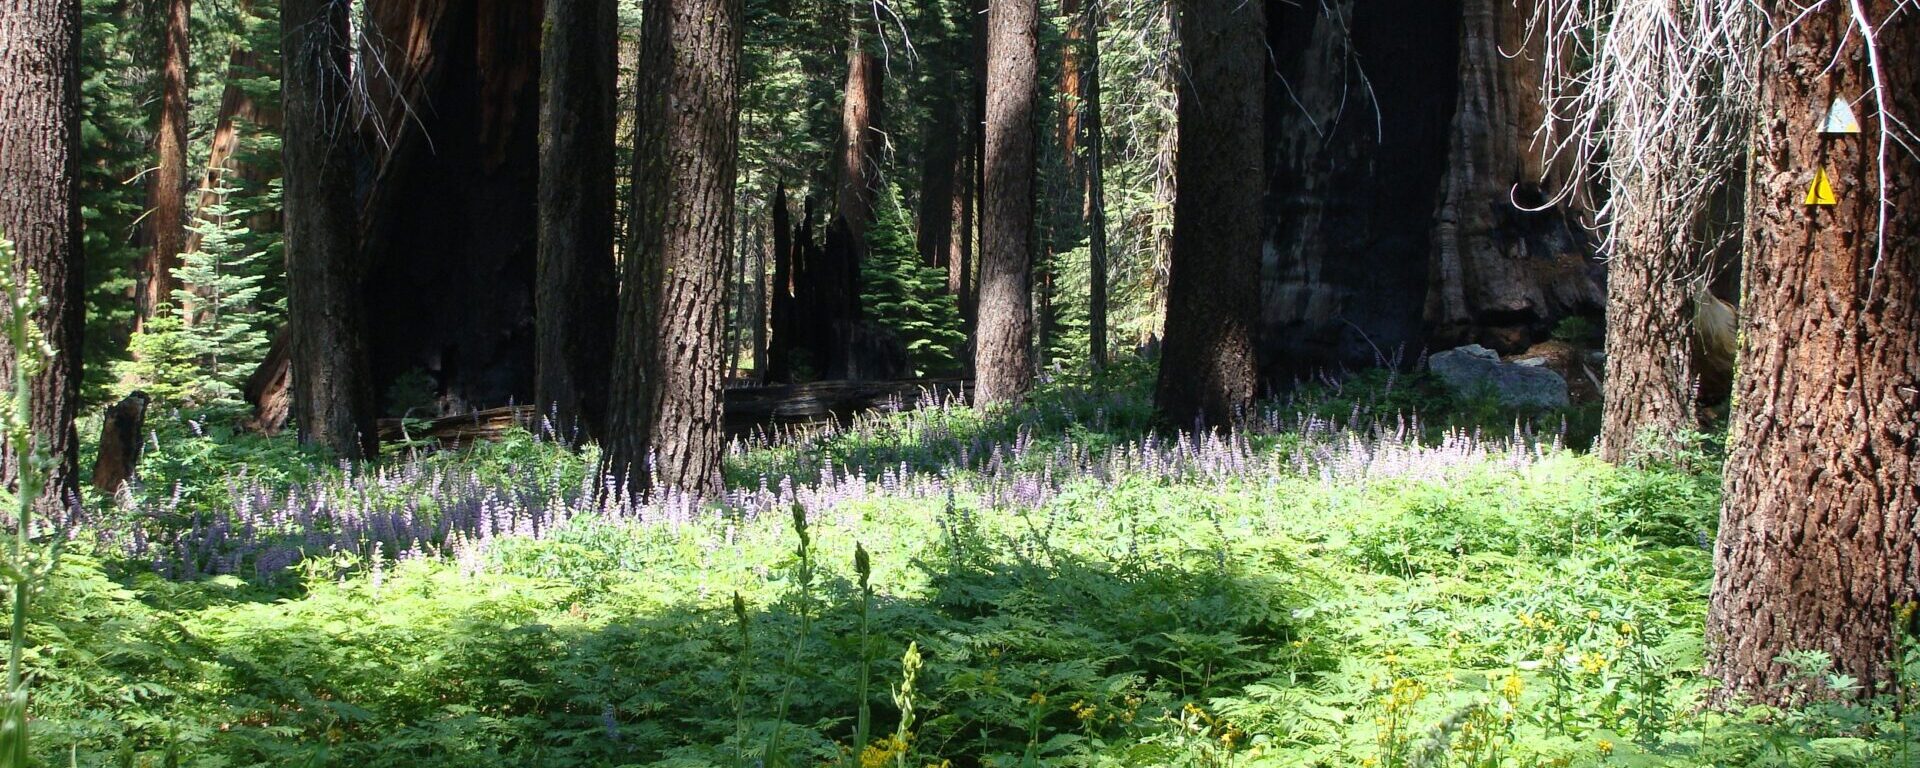 Sequoia forest with underbush.